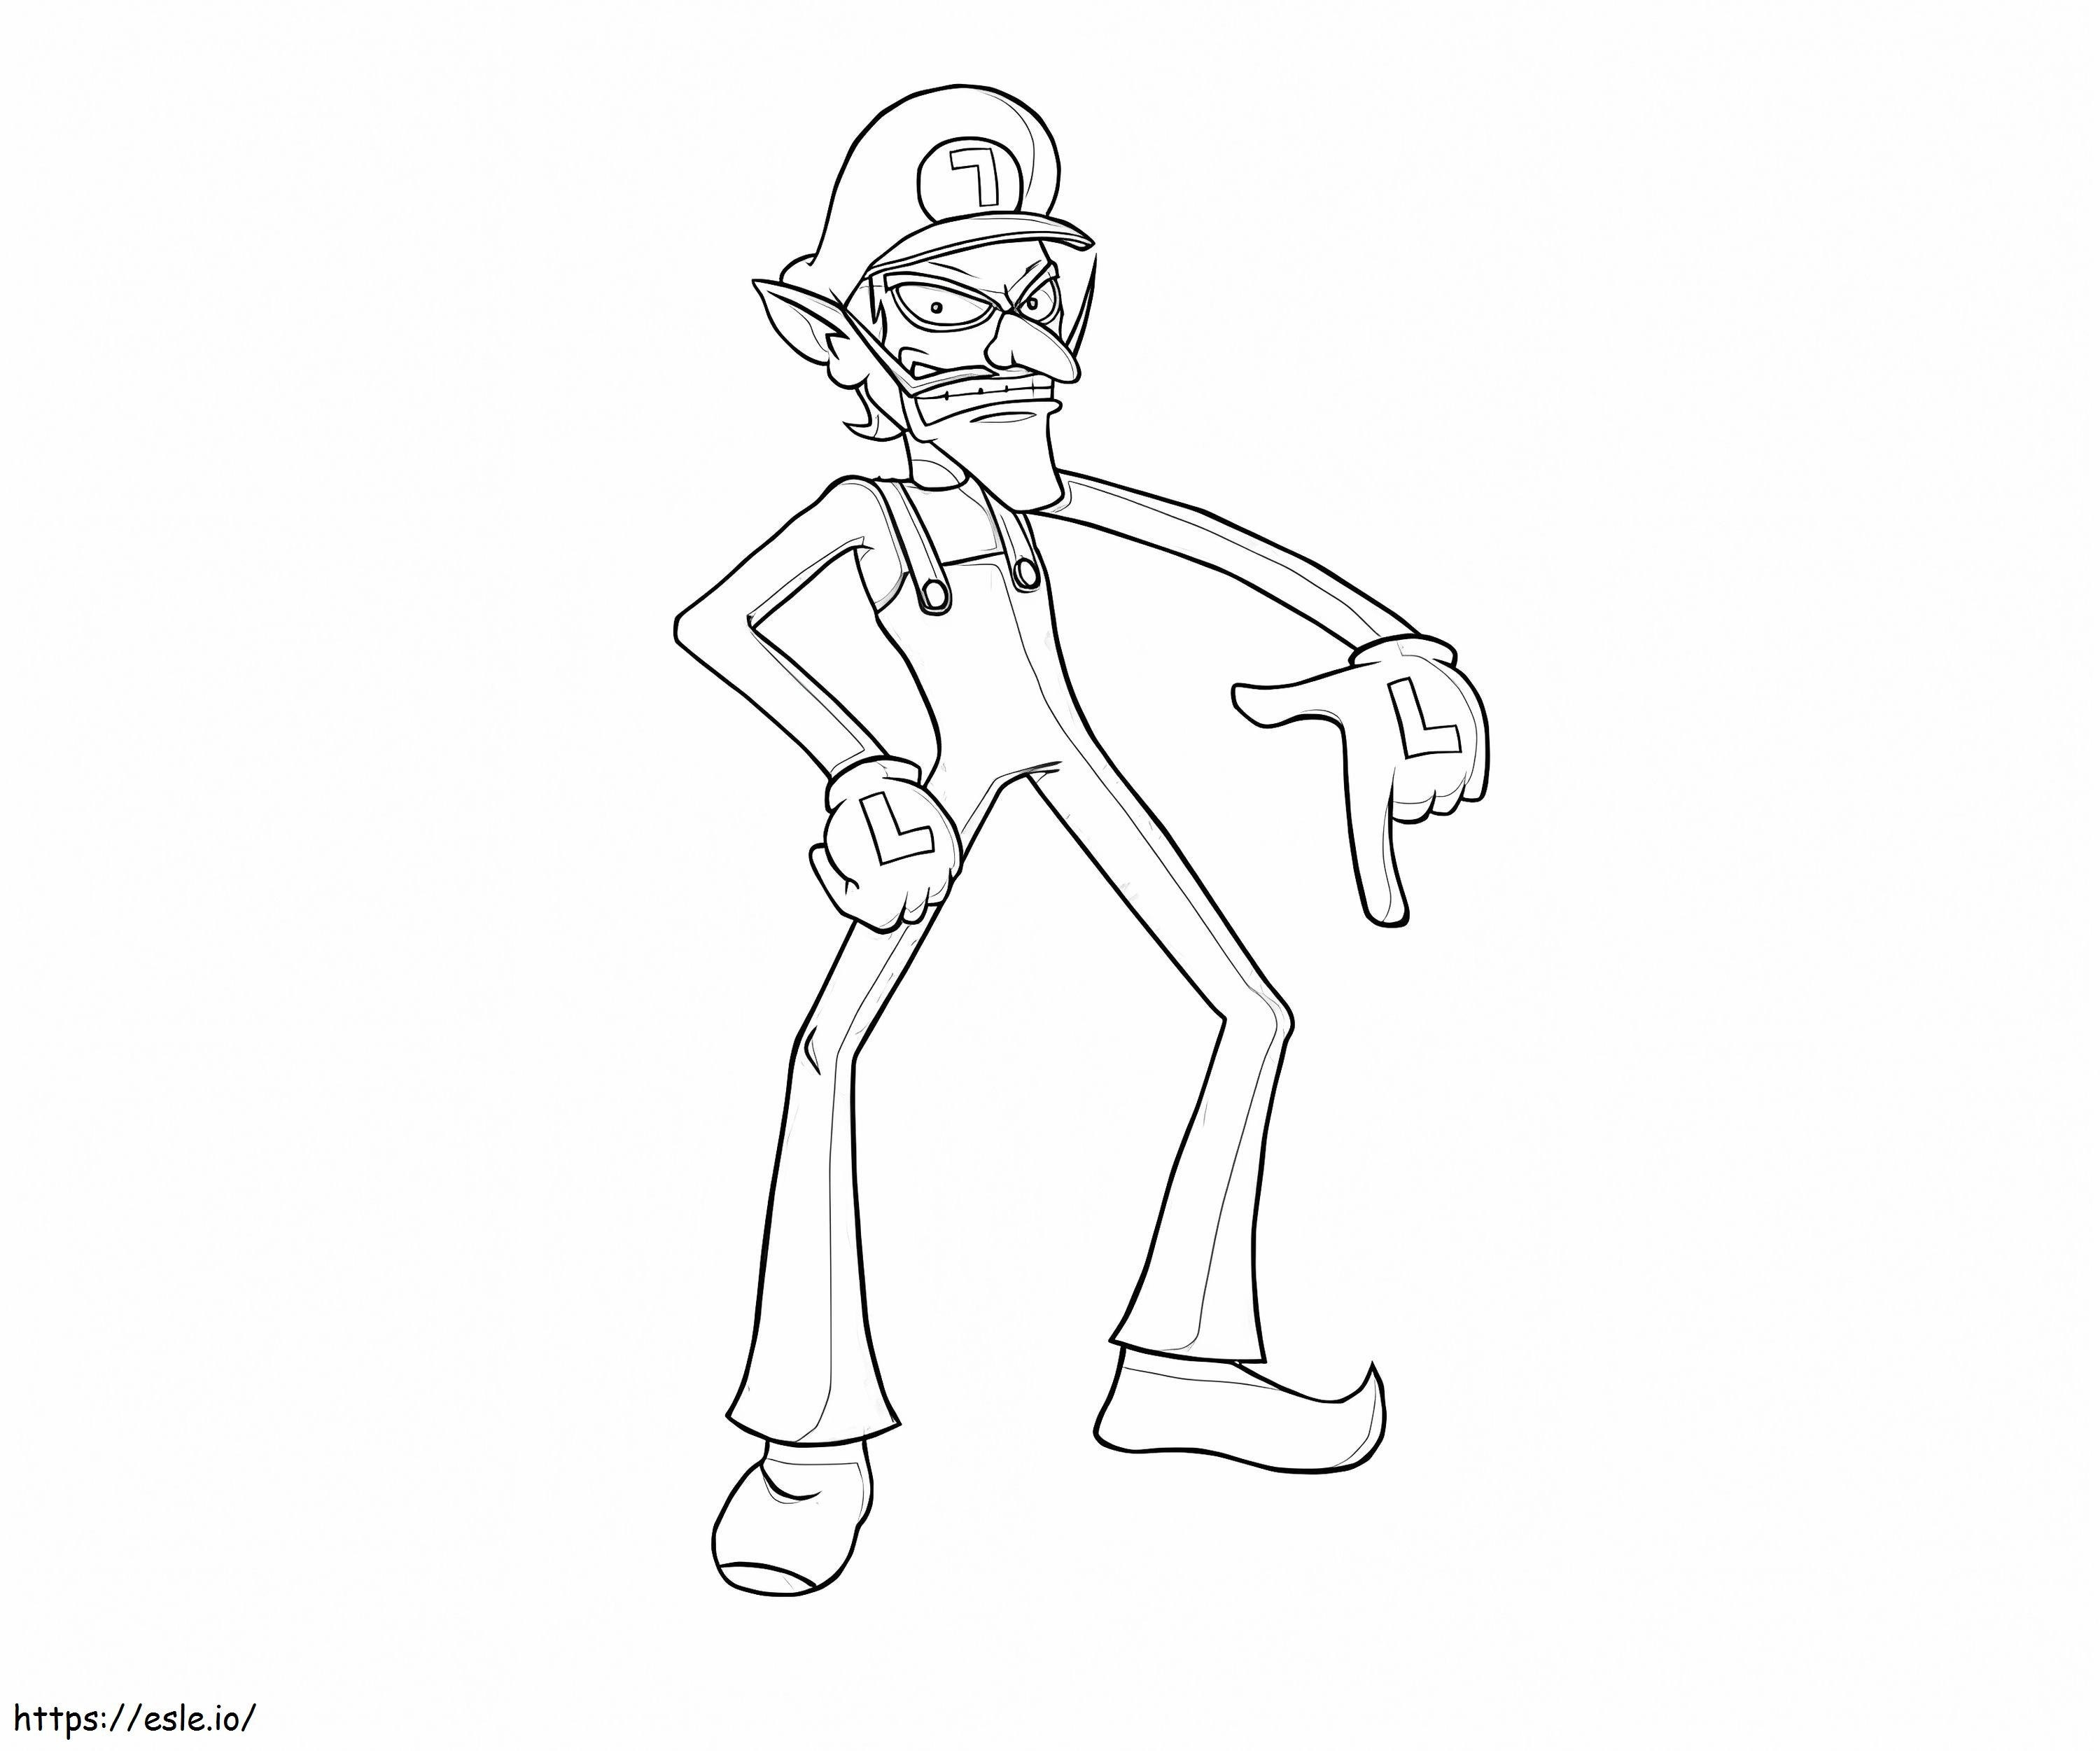 Waluigi From Super Mario 3 coloring page